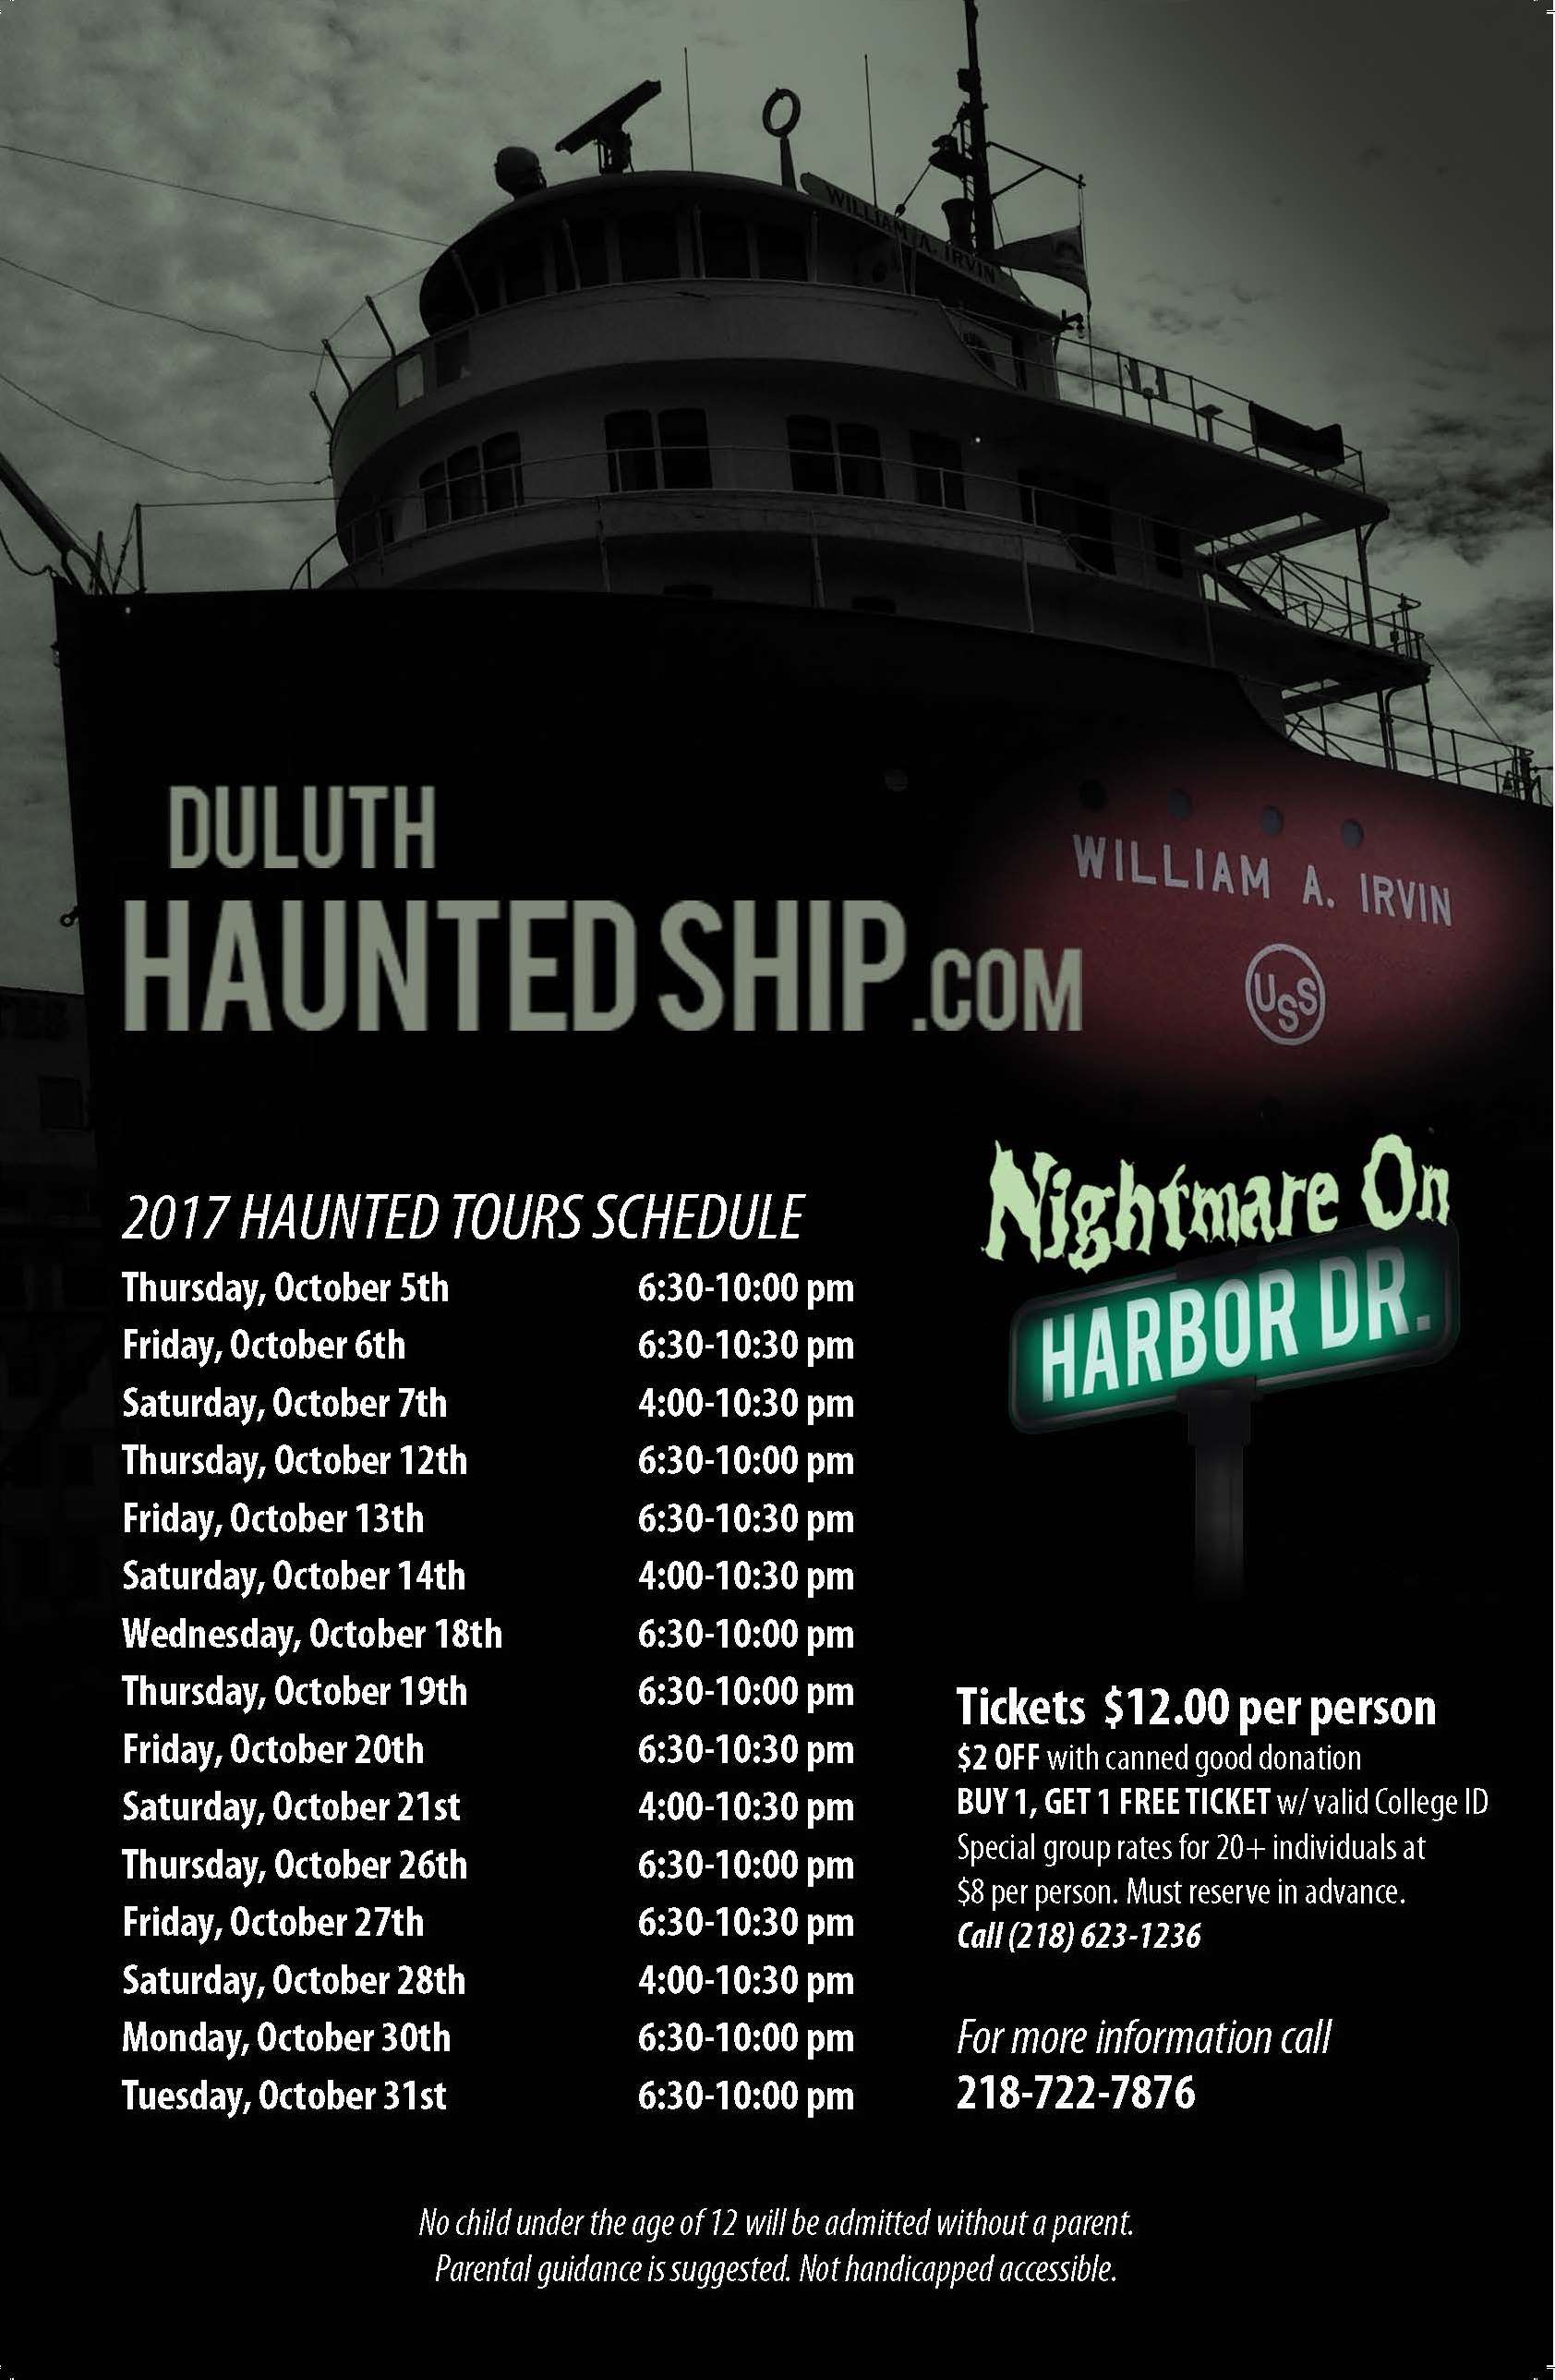 hauntedship17 Duluth Haunted Ship